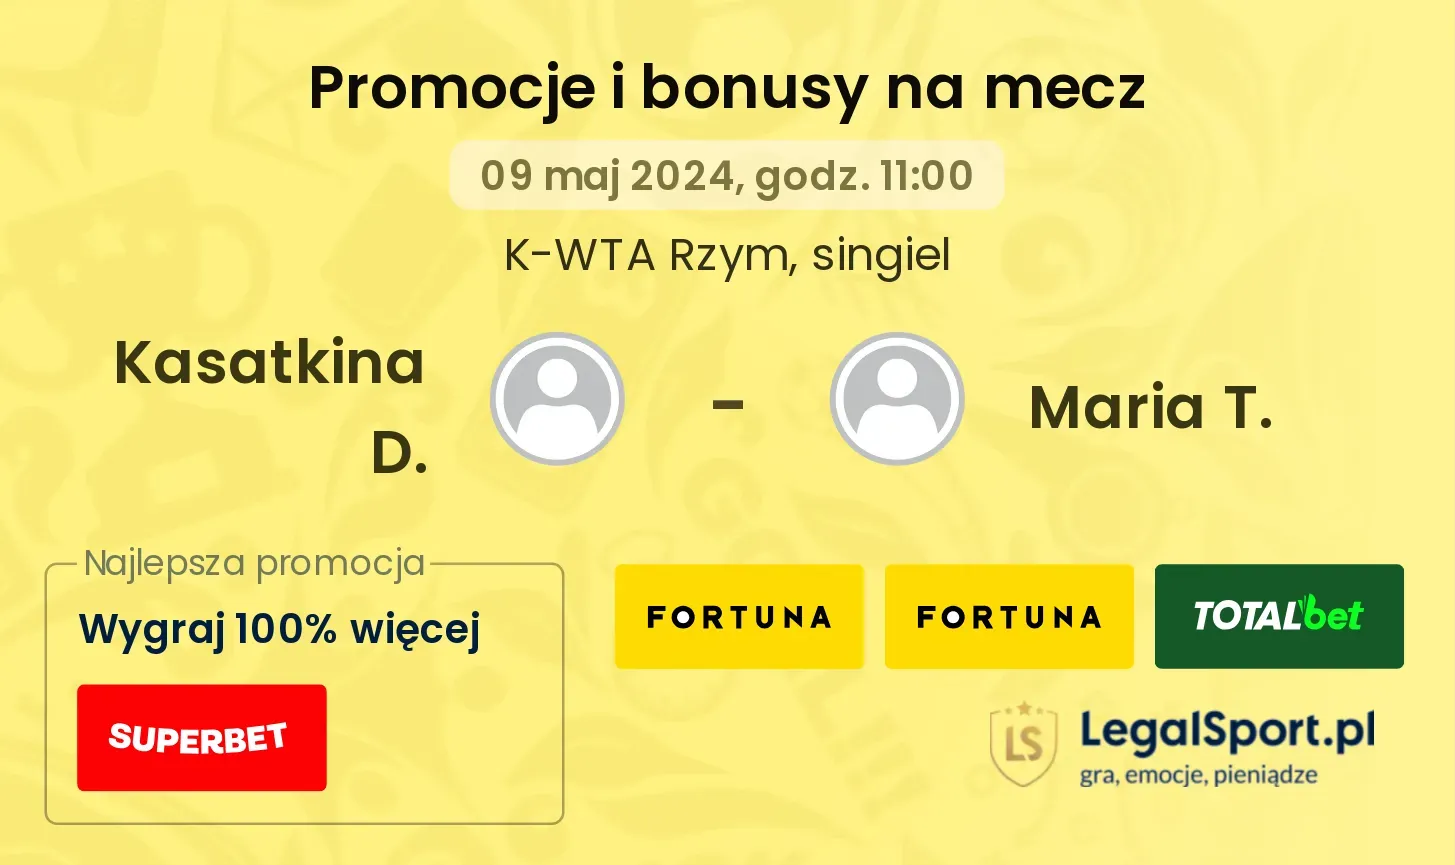 Kasatkina D. - Maria T. promocje bonusy na mecz